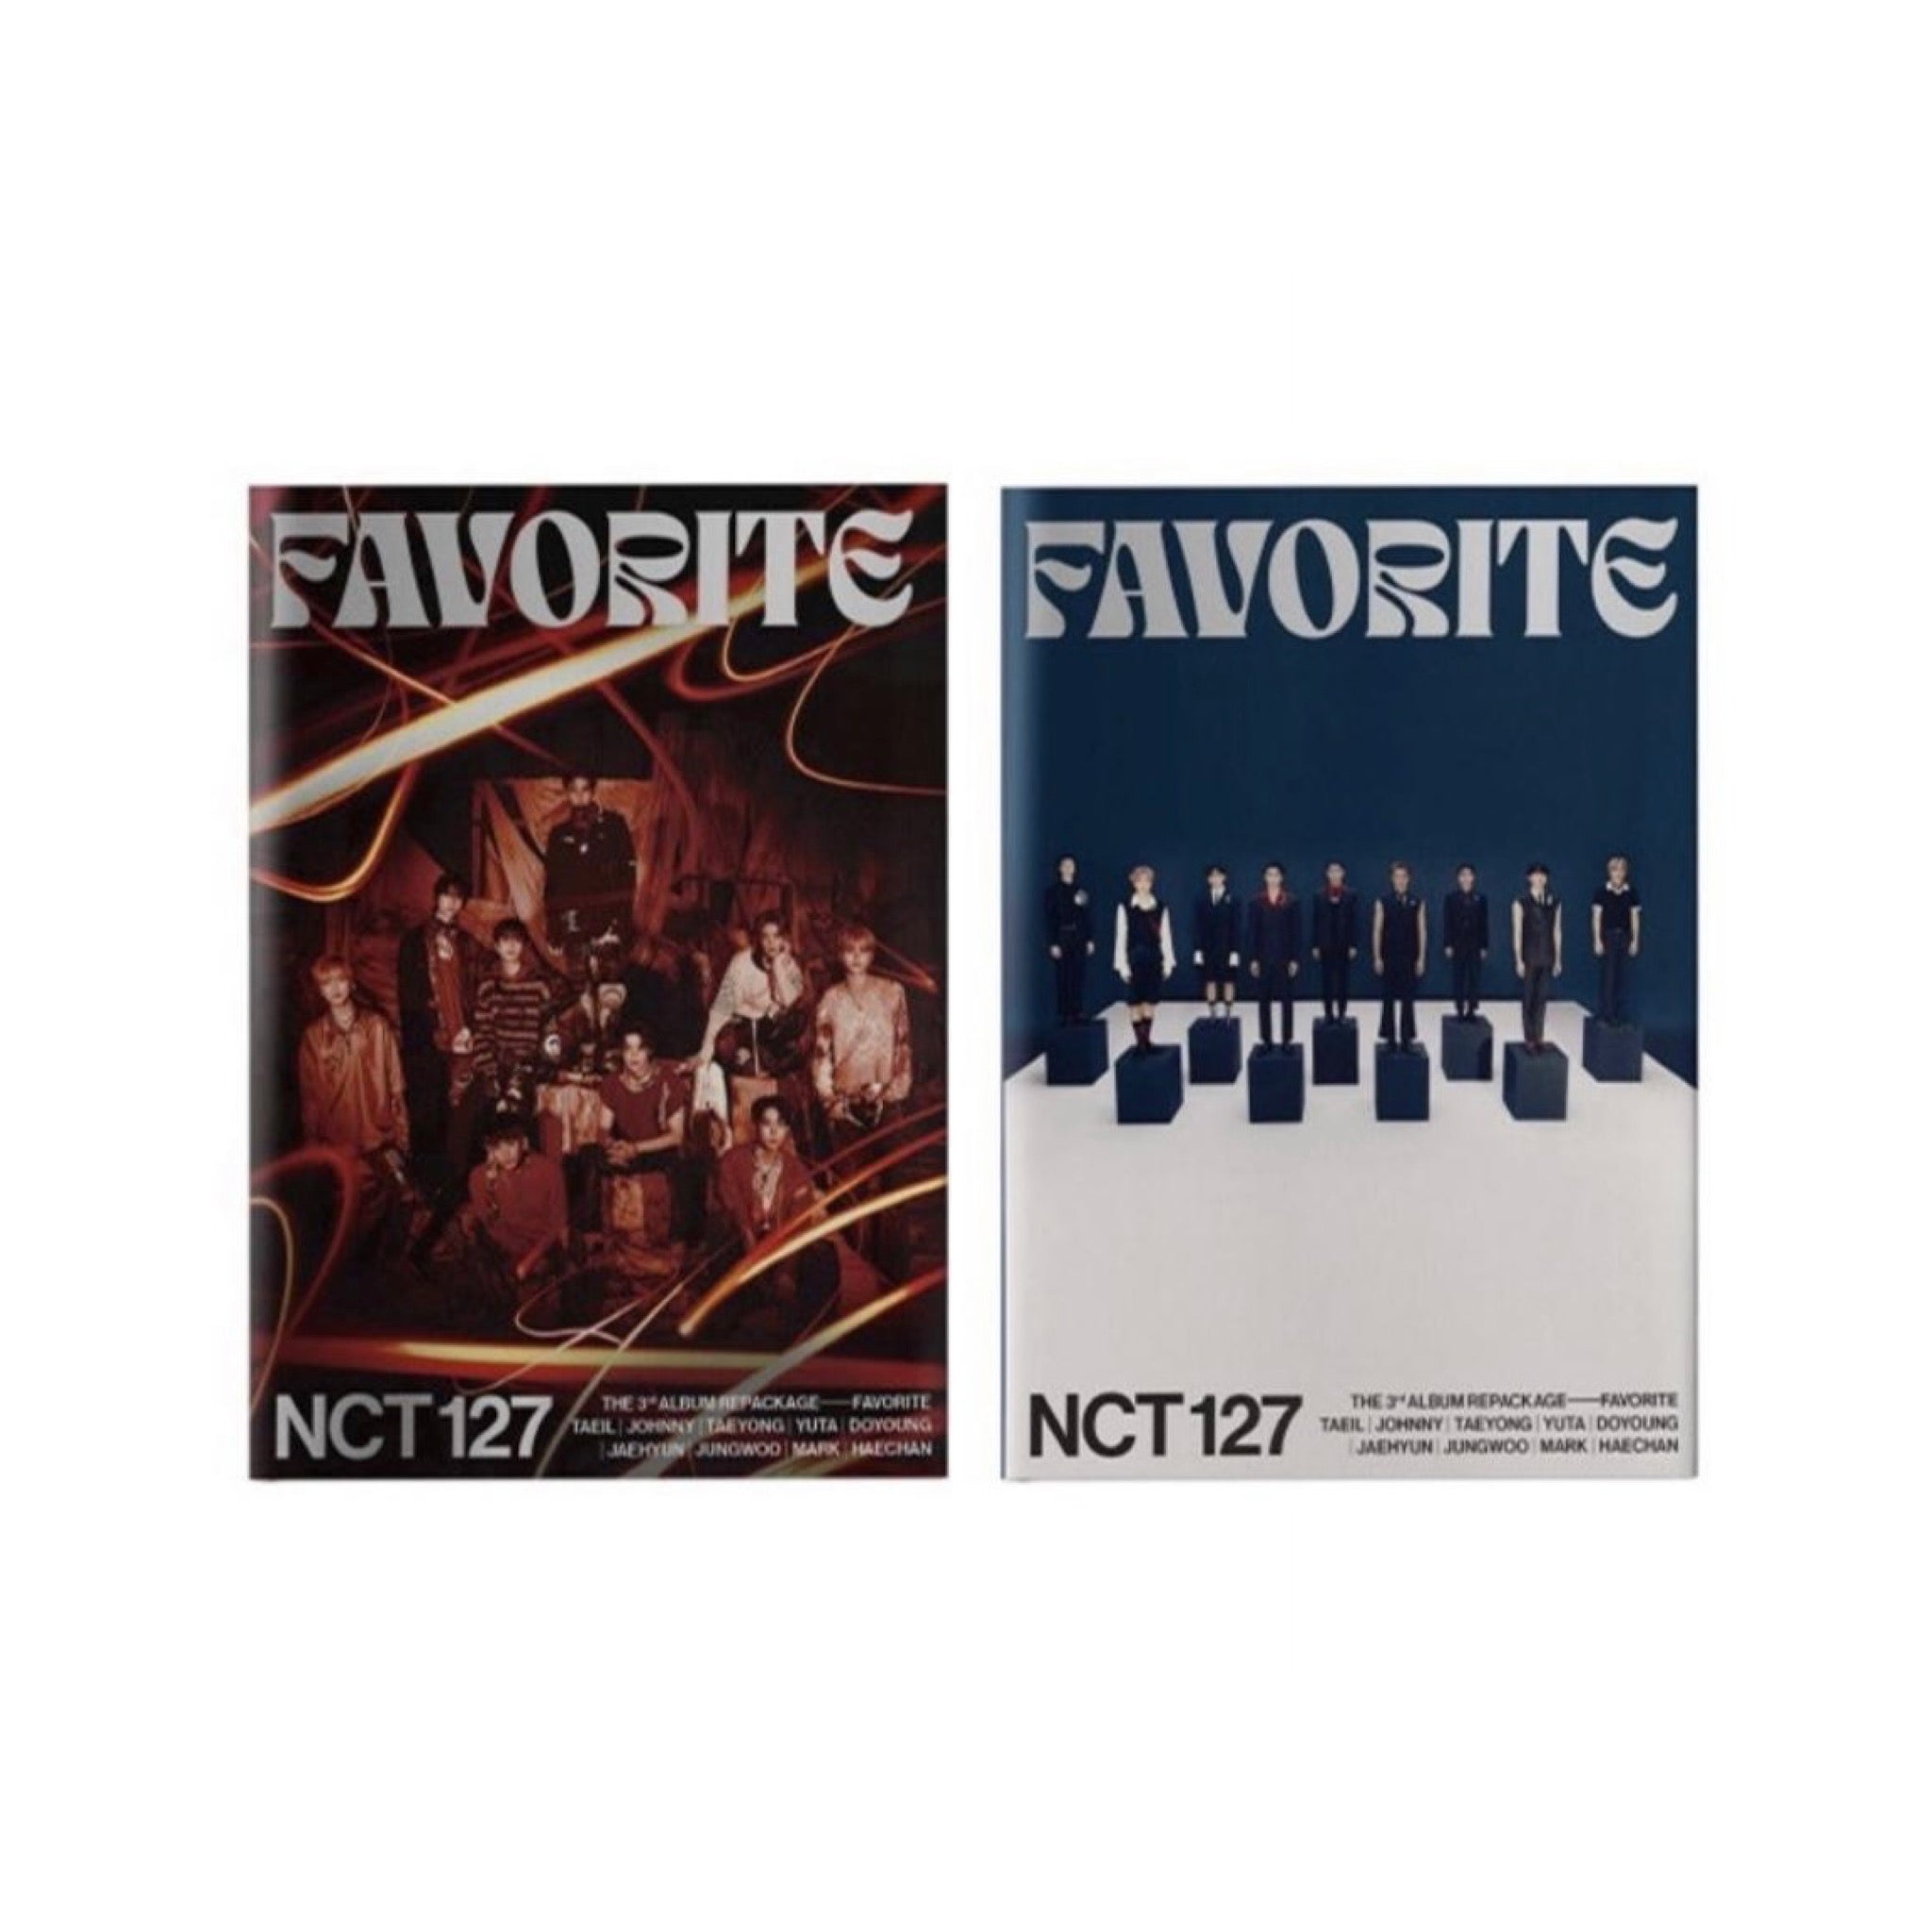 NCT 127 - 3RD ALBUM REPACKAGE FAVORITE ✅